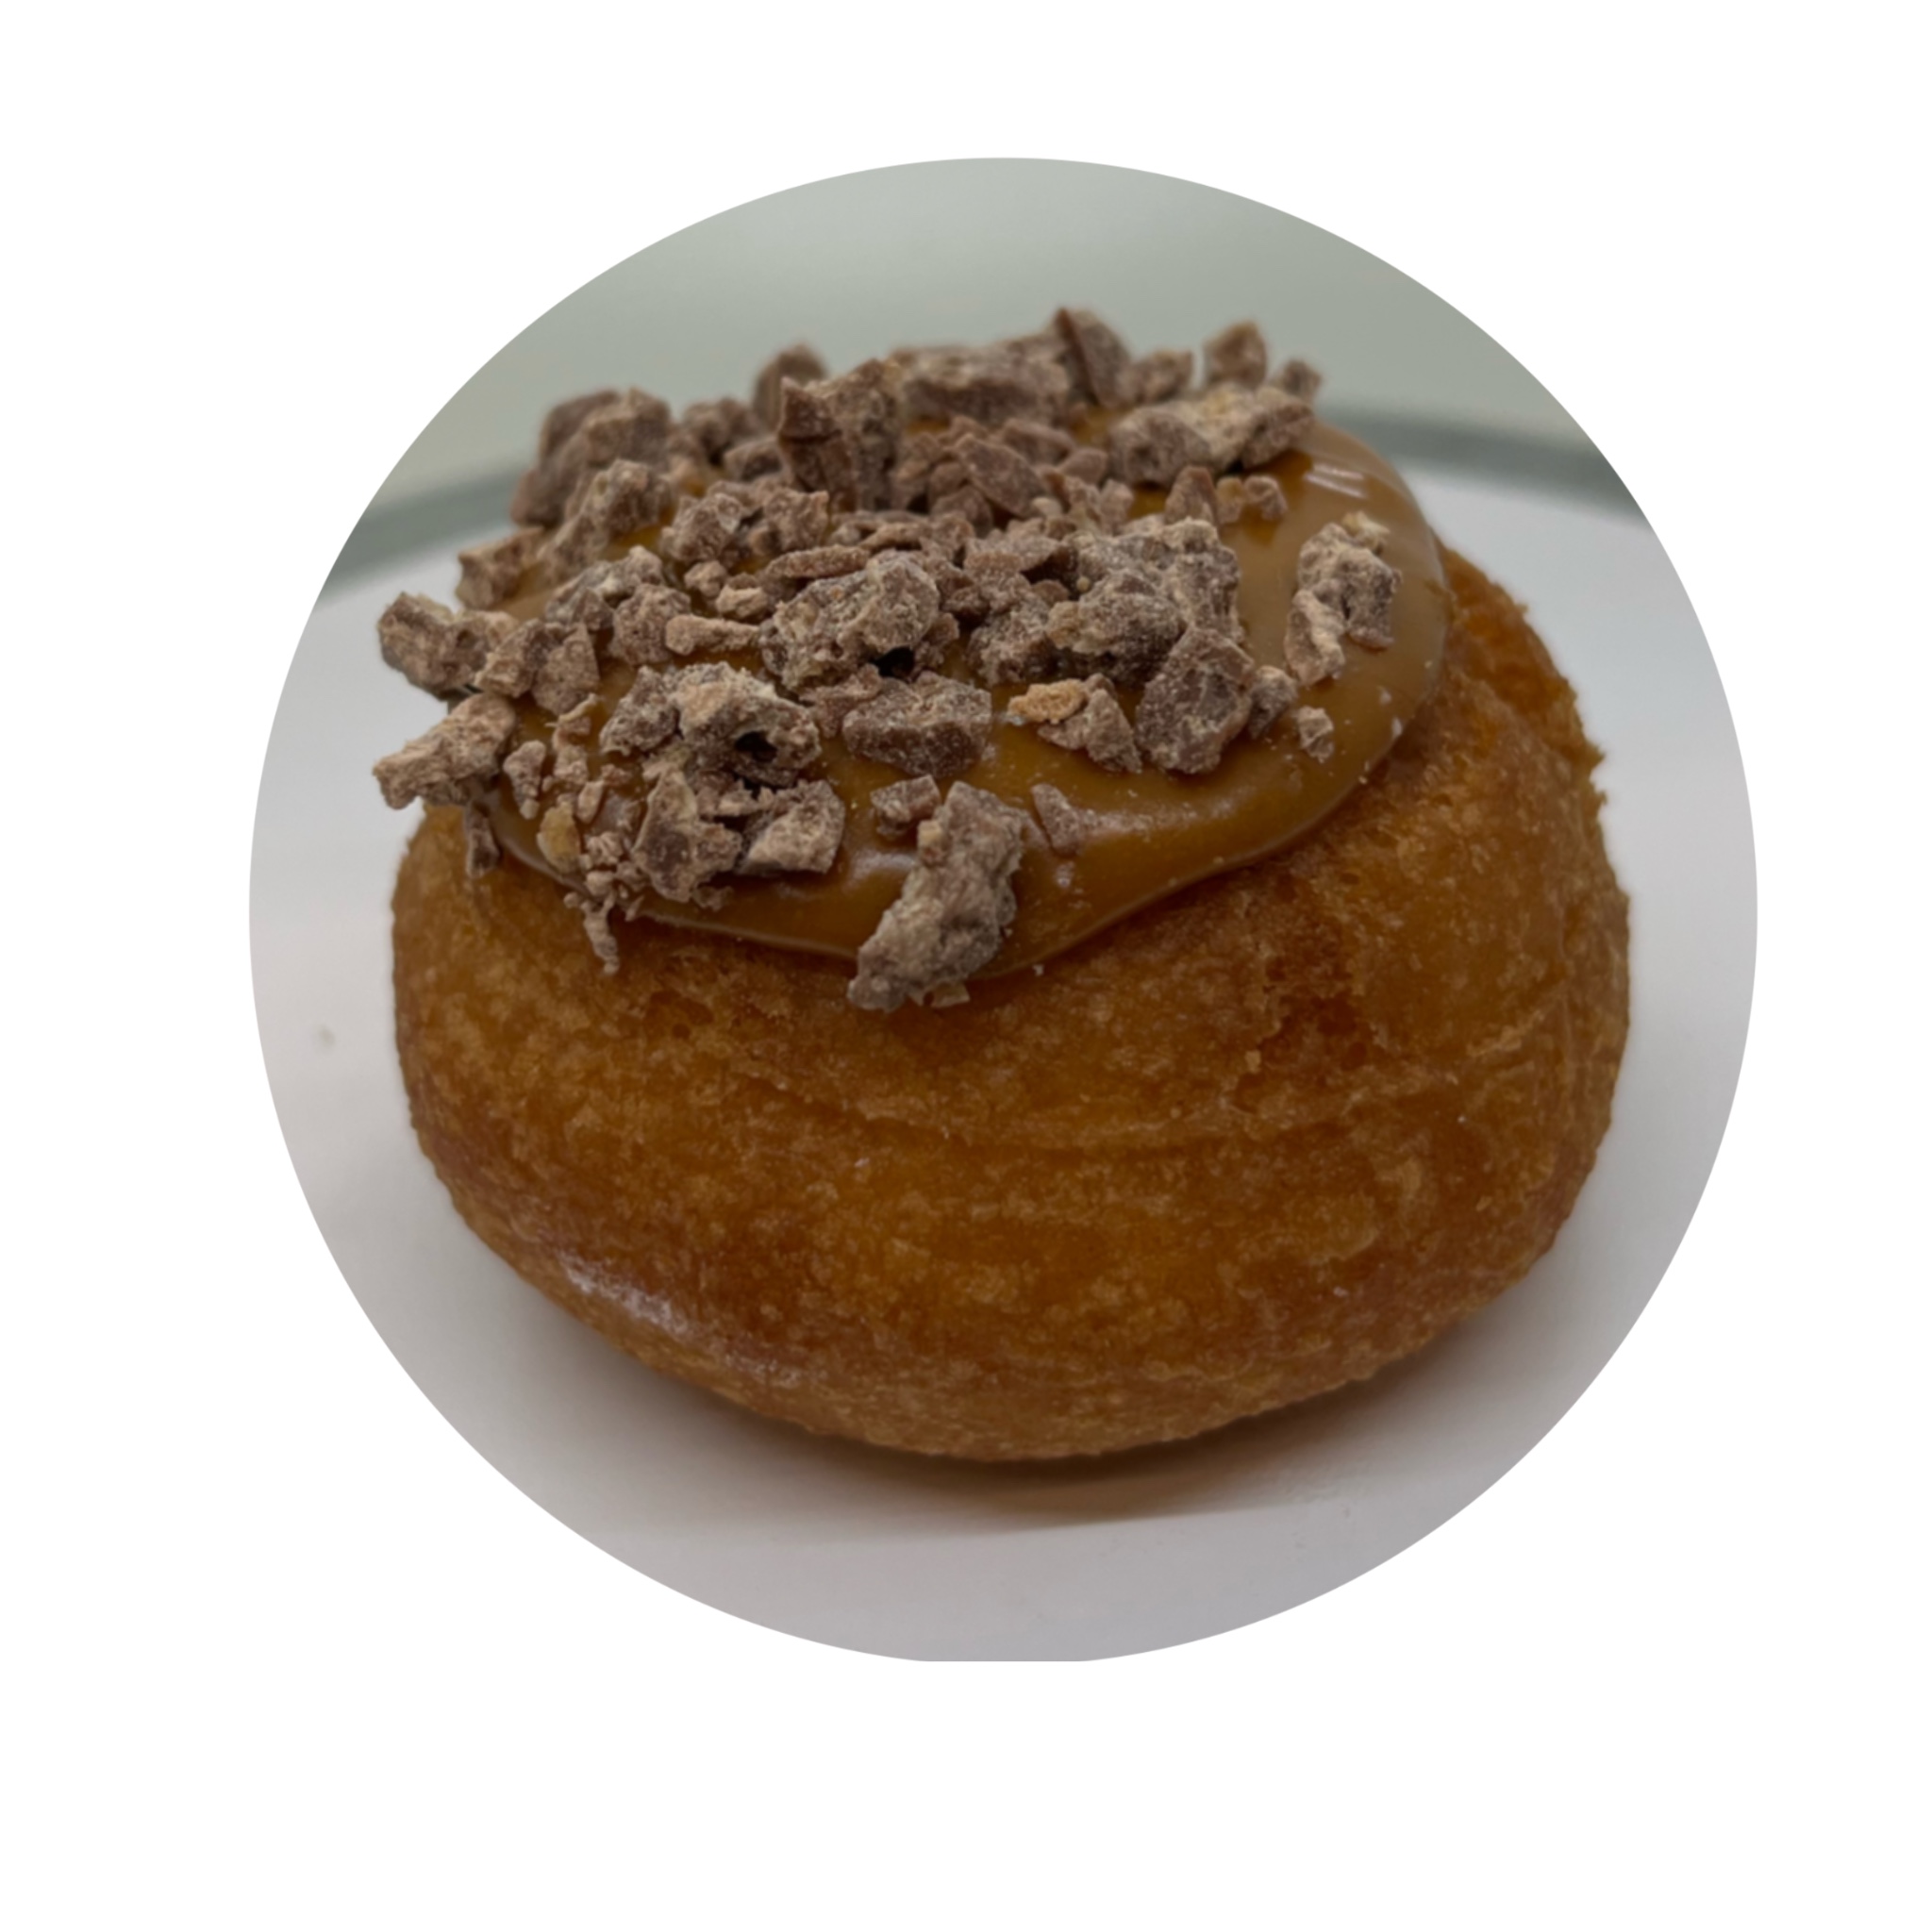 caramel crunch donut 1